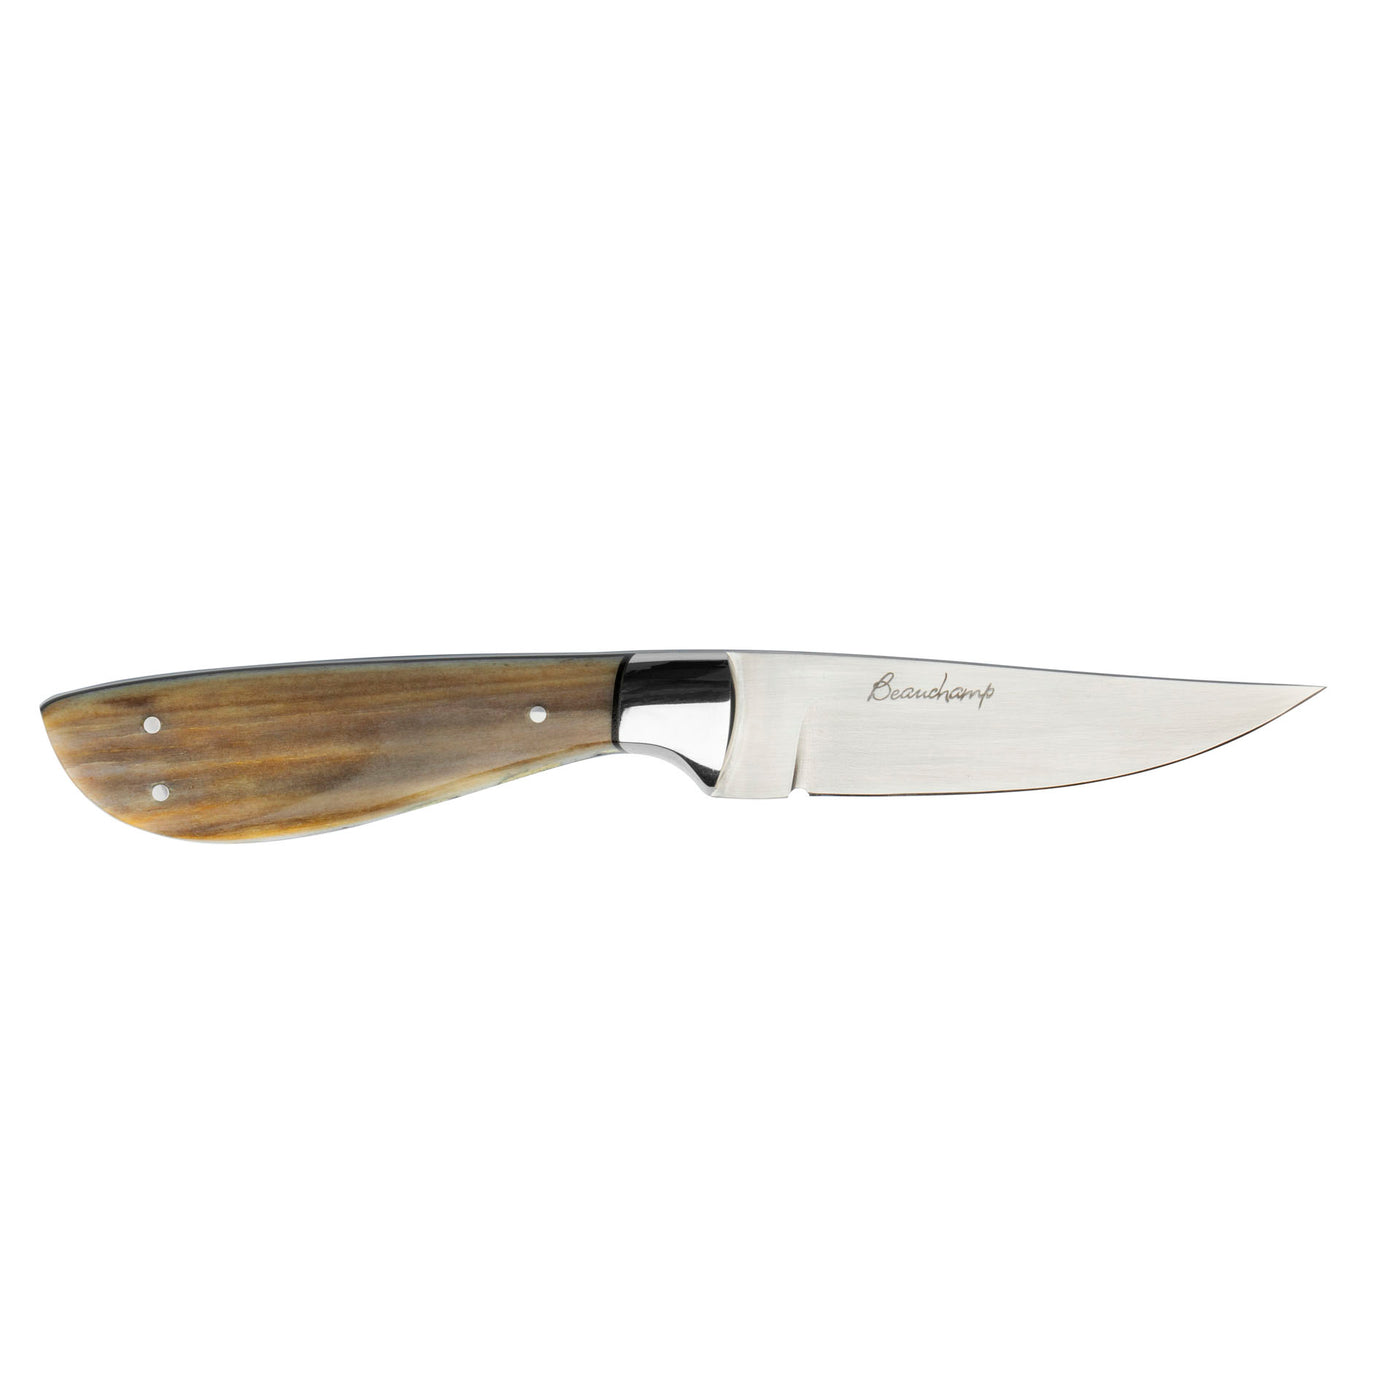 Swordfish Bill fixed Blade Knife | Beretta Gallery USA